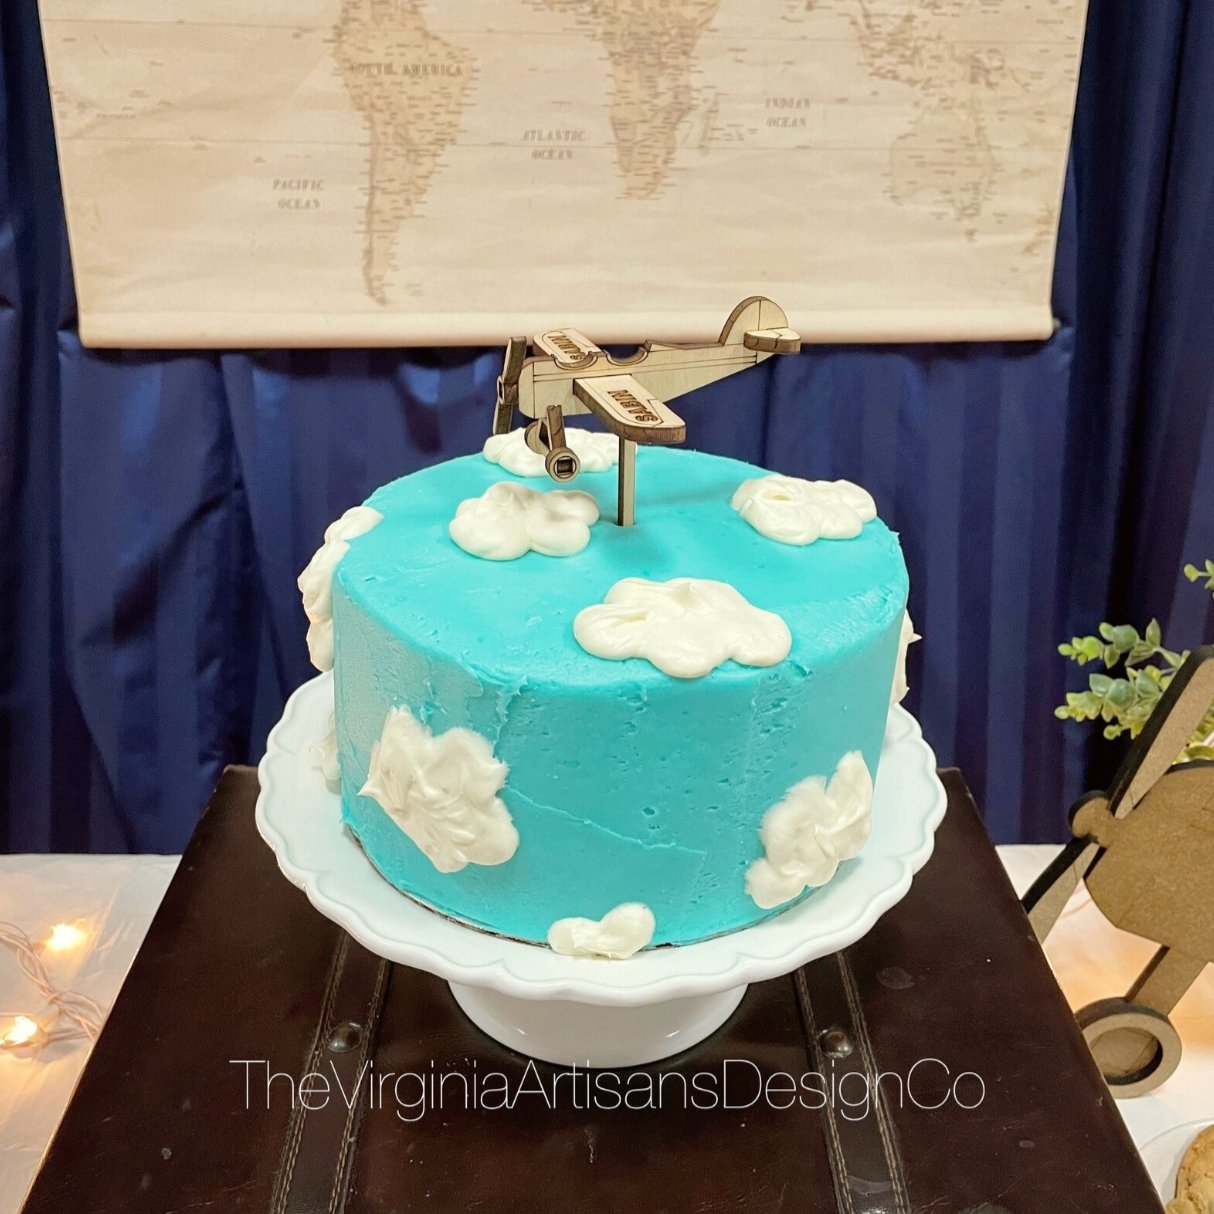 Jet Plane Fondant Cake Topper, Airplane Cake Decorations, Airline themed  birthday party, handmade edible fondant topper, transportation cake